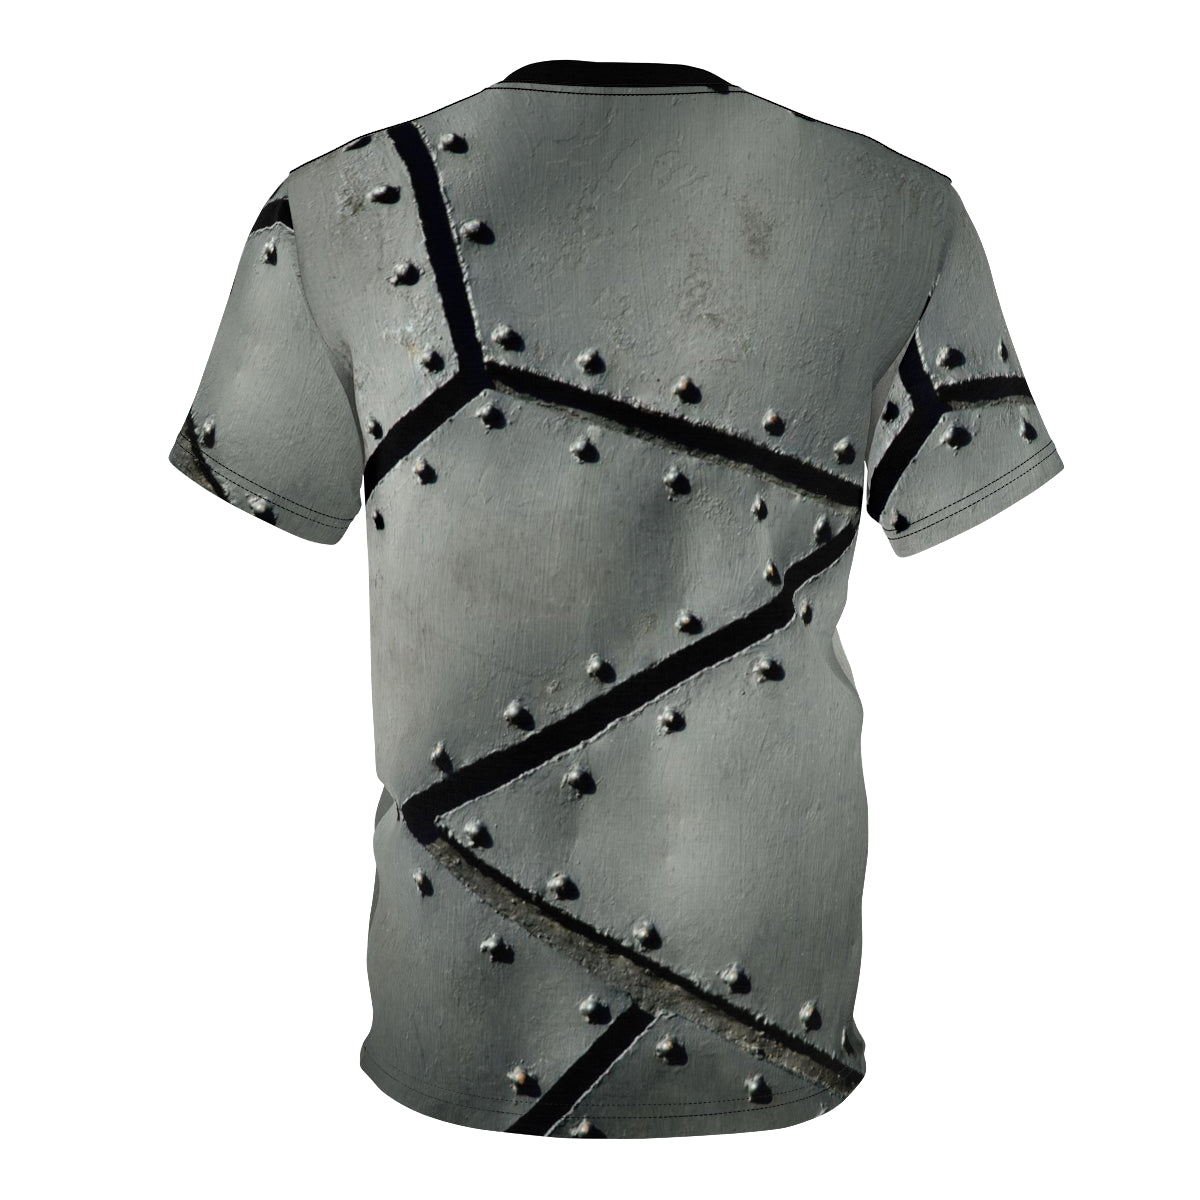 Iron Plate Armor Shirt